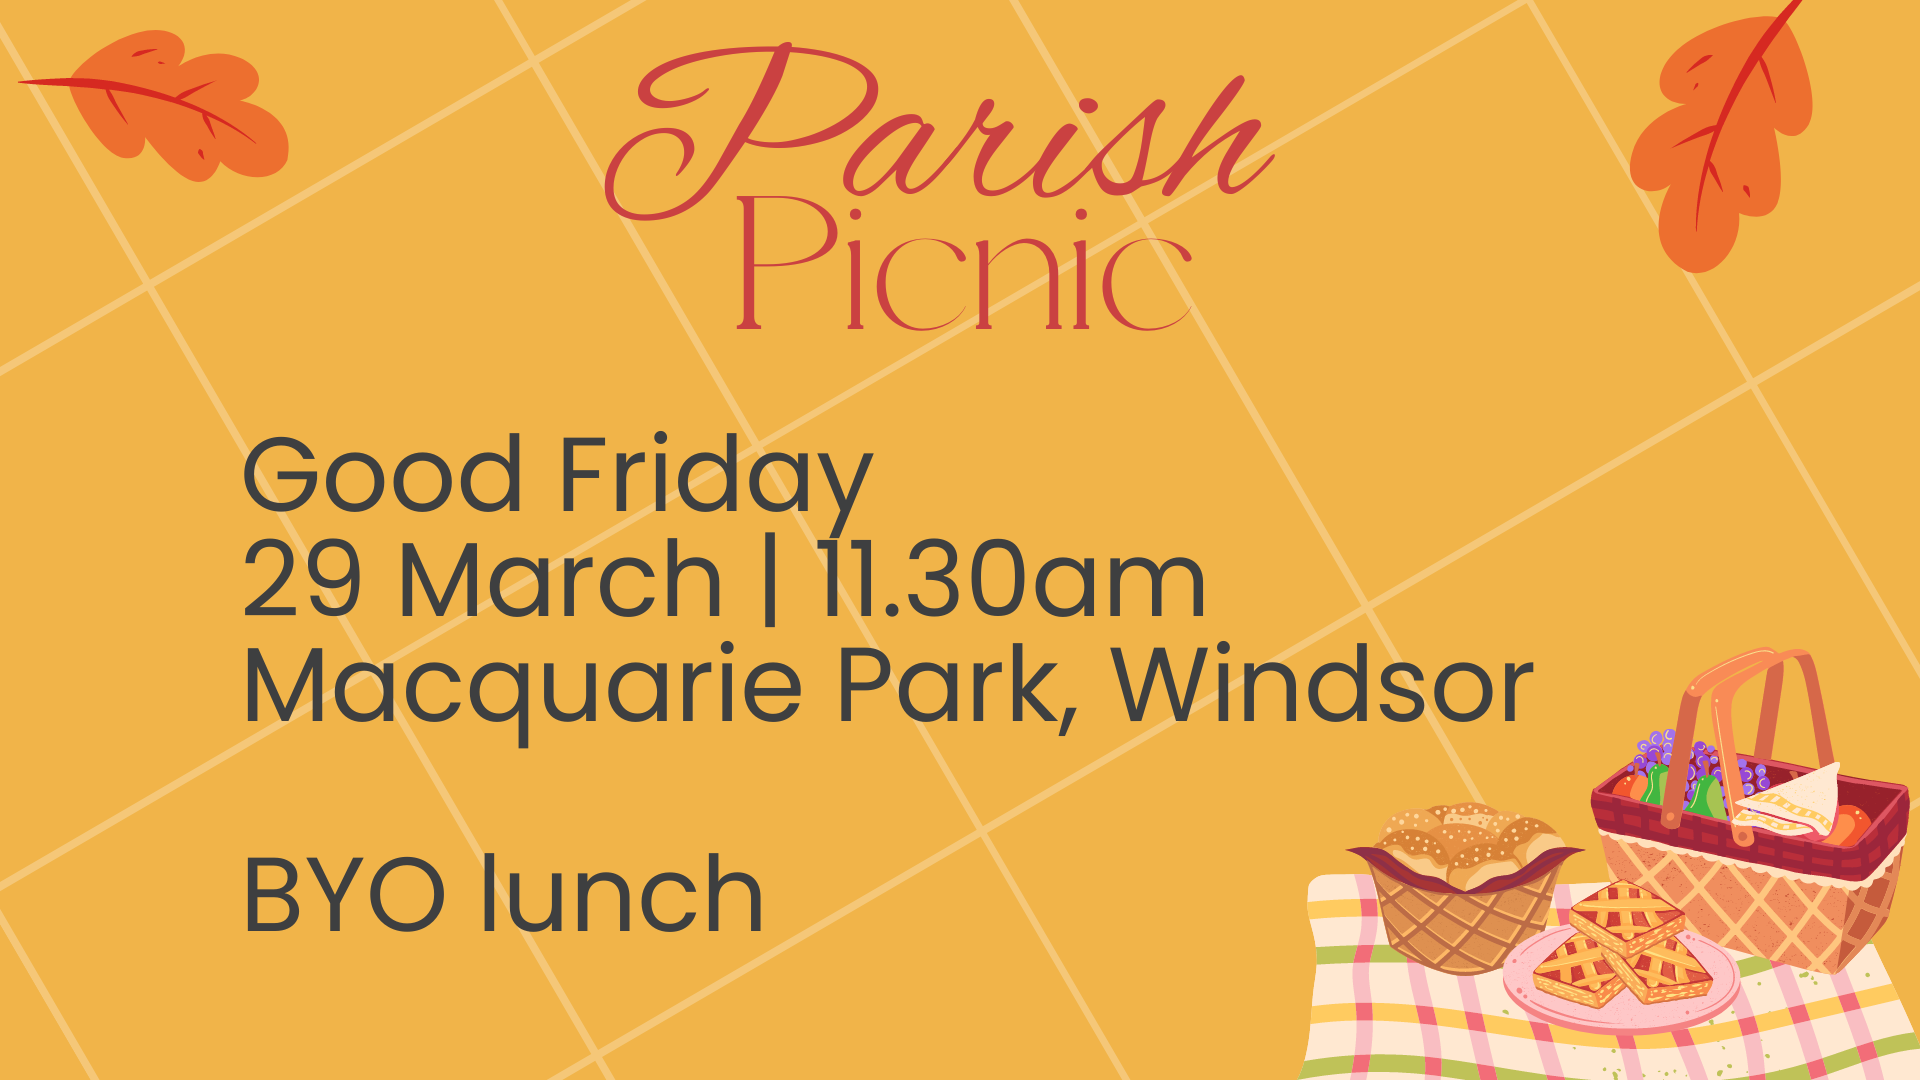 Good Friday Church Picnic 2024 - 11.30am at Macquarie Park, Windsor - BYO lunch